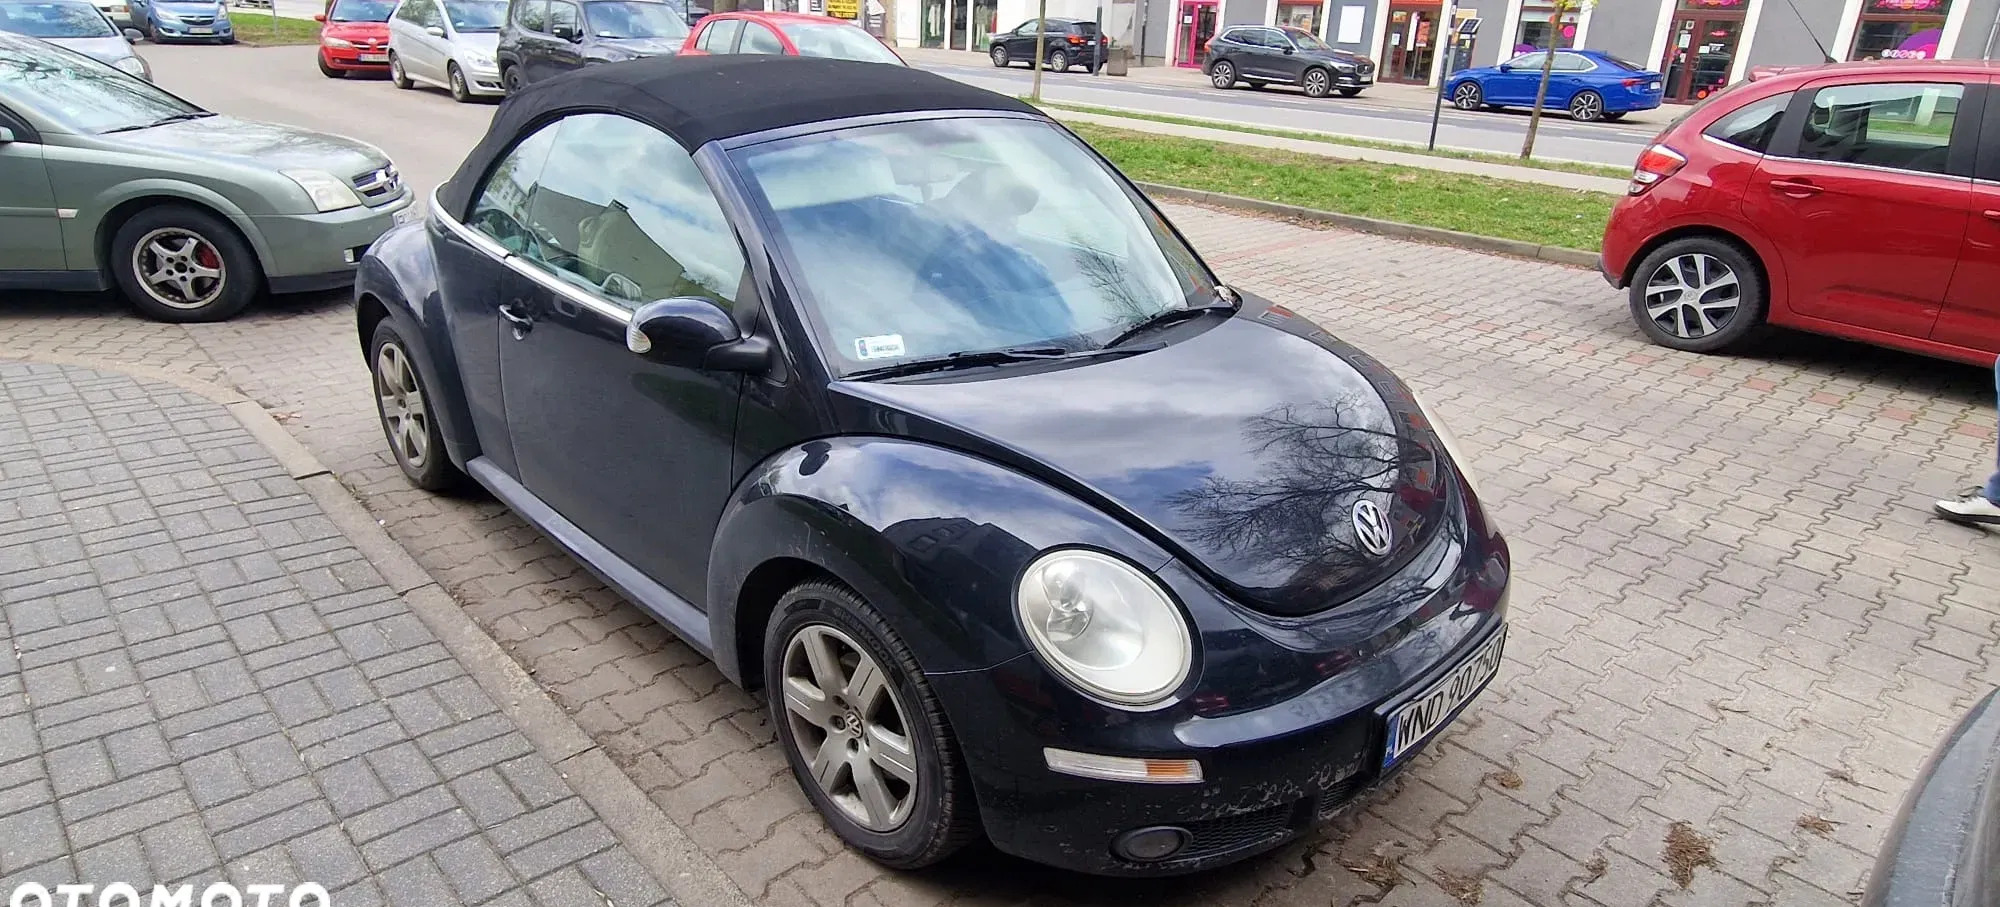 volkswagen Volkswagen New Beetle cena 15500 przebieg: 209599, rok produkcji 2009 z Łódź